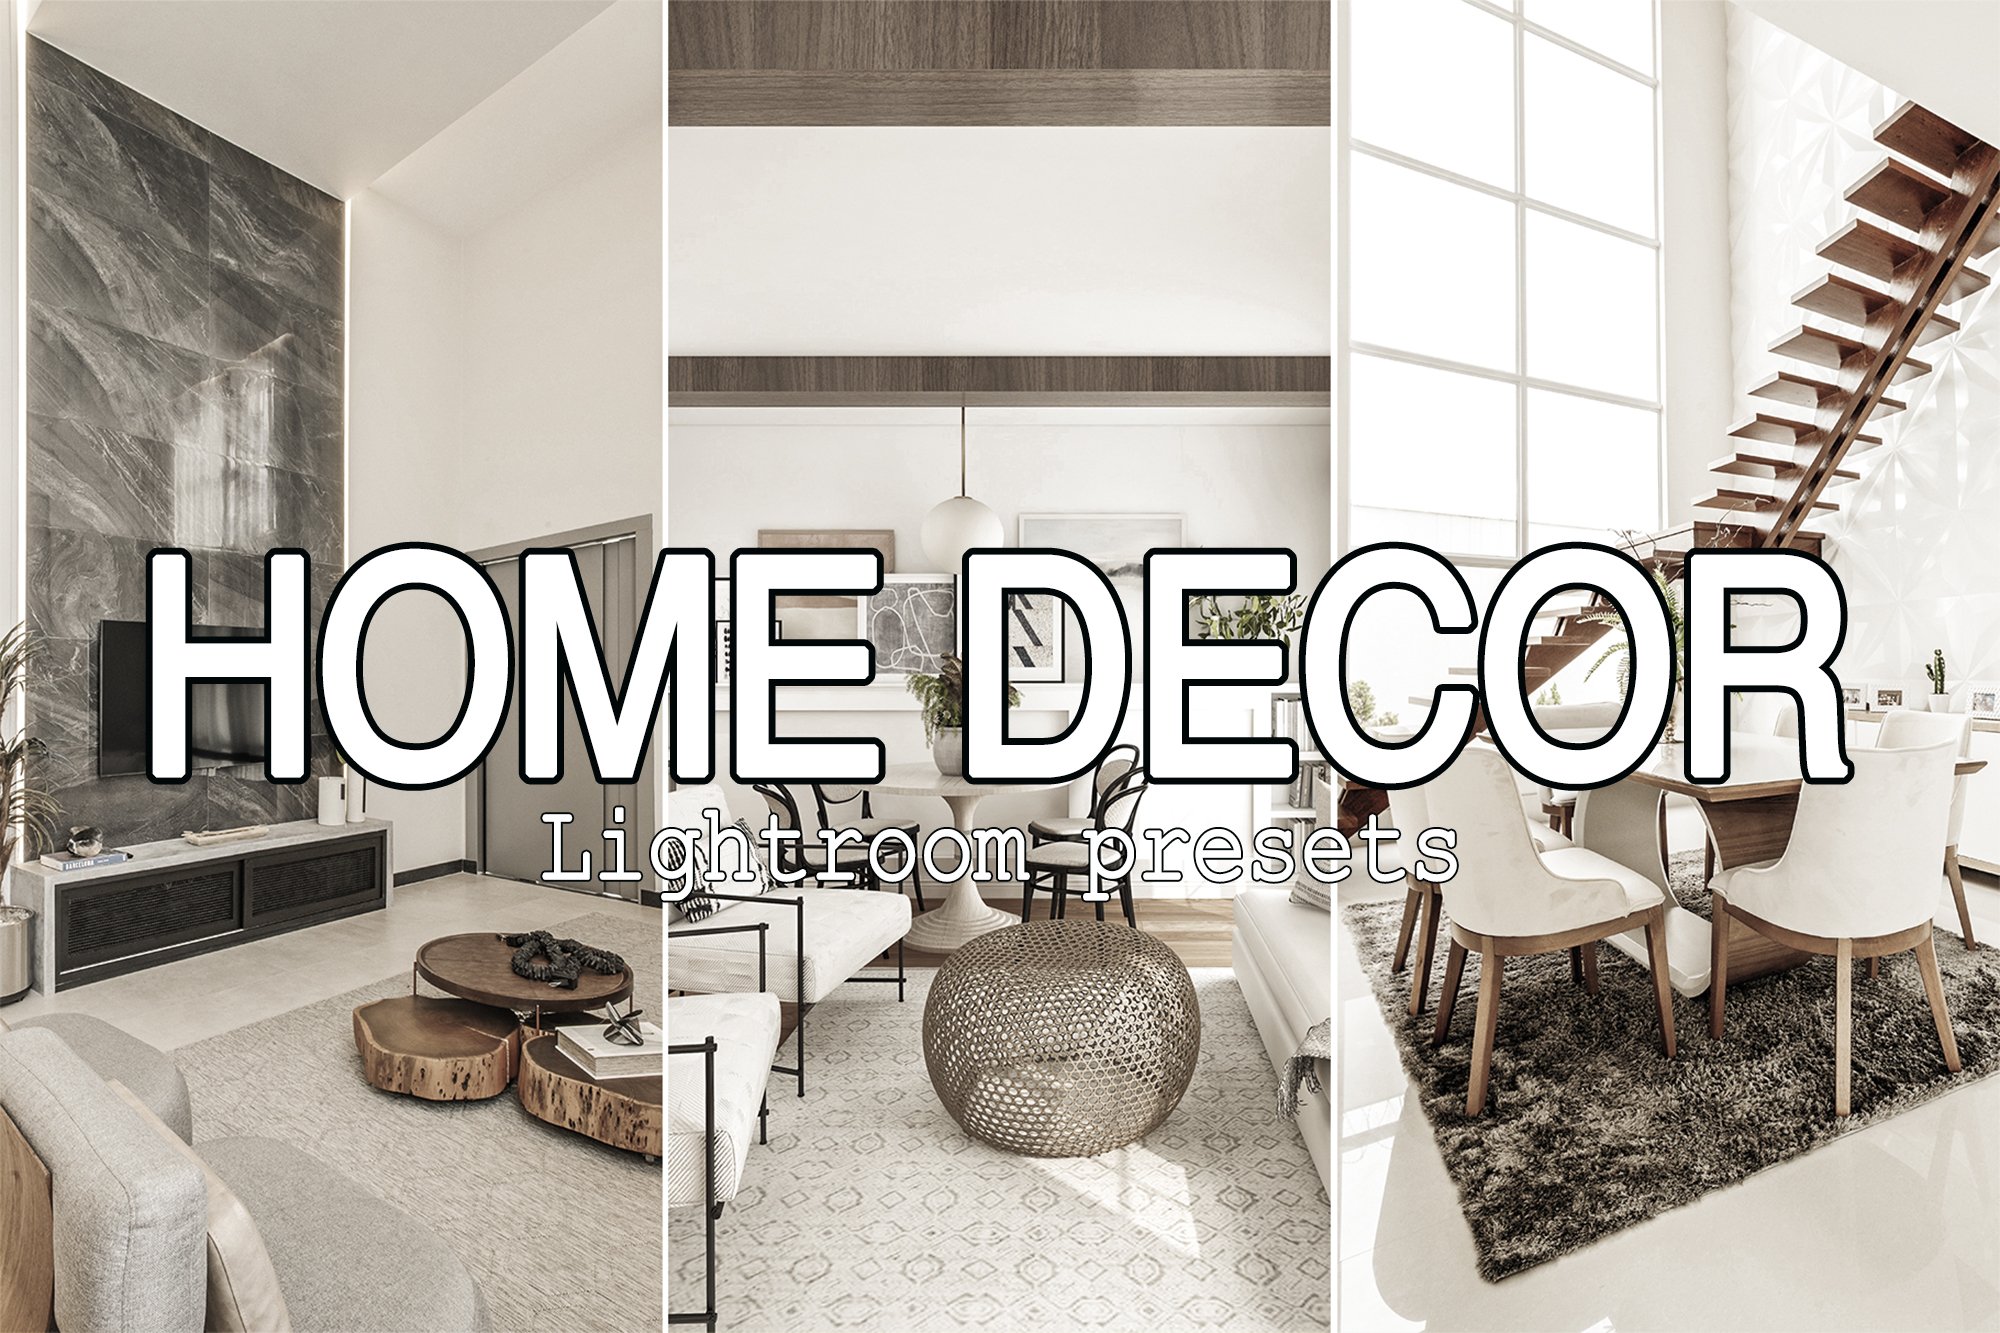 6 Home Decor Lightroom presetscover image.